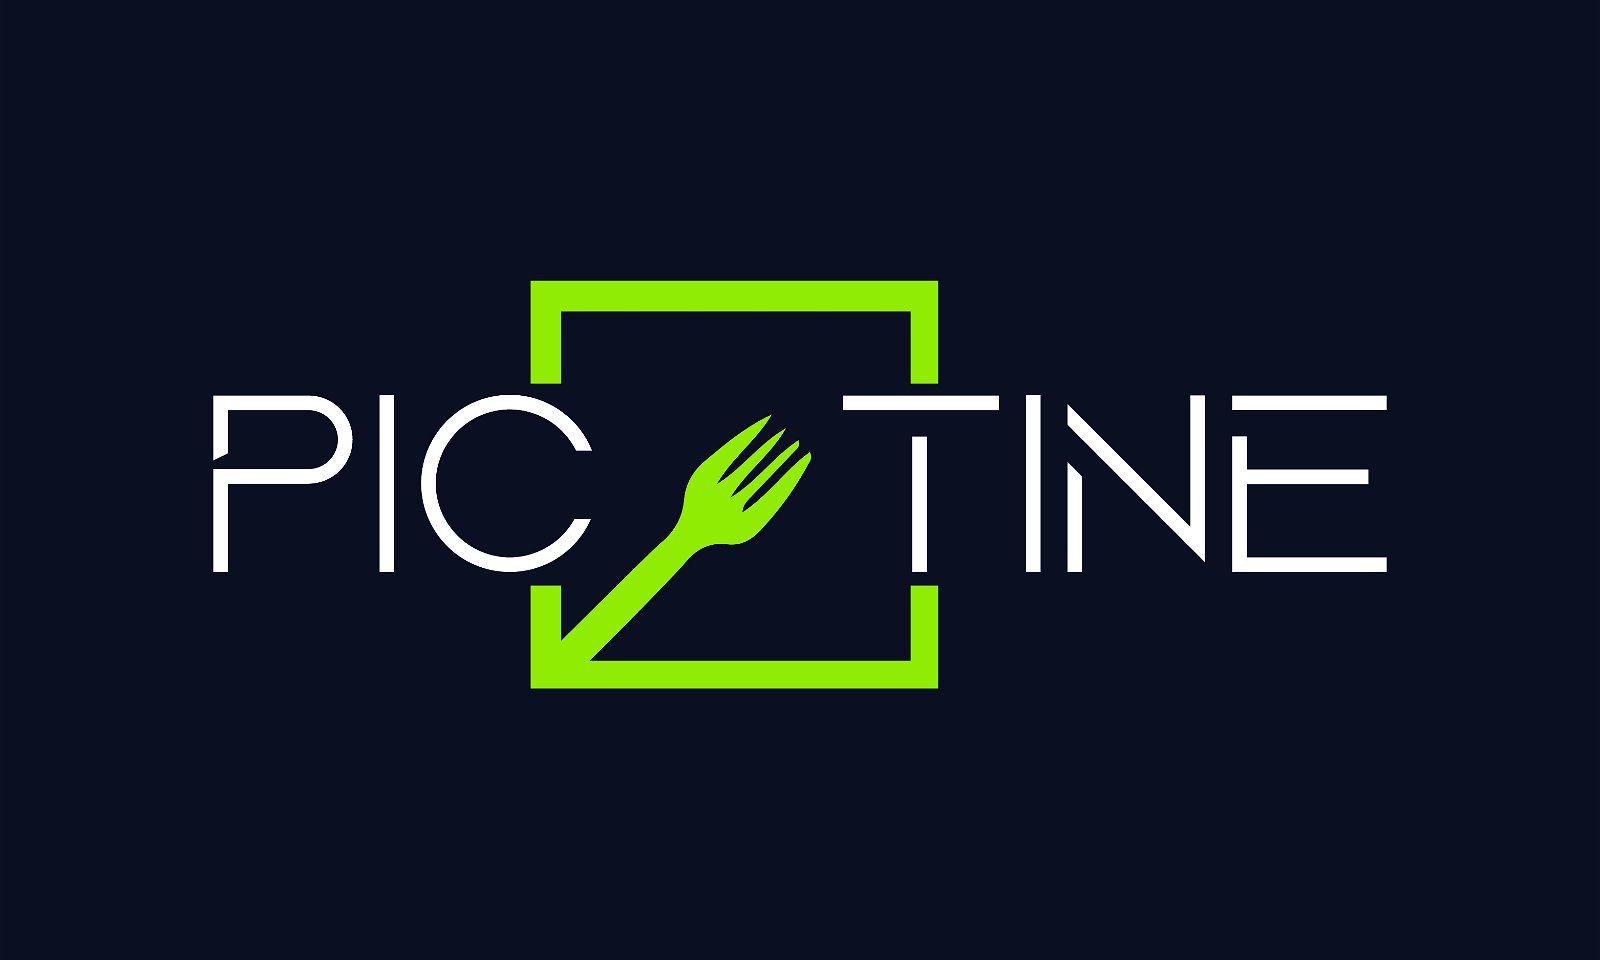 PicTine.com - Creative brandable domain for sale